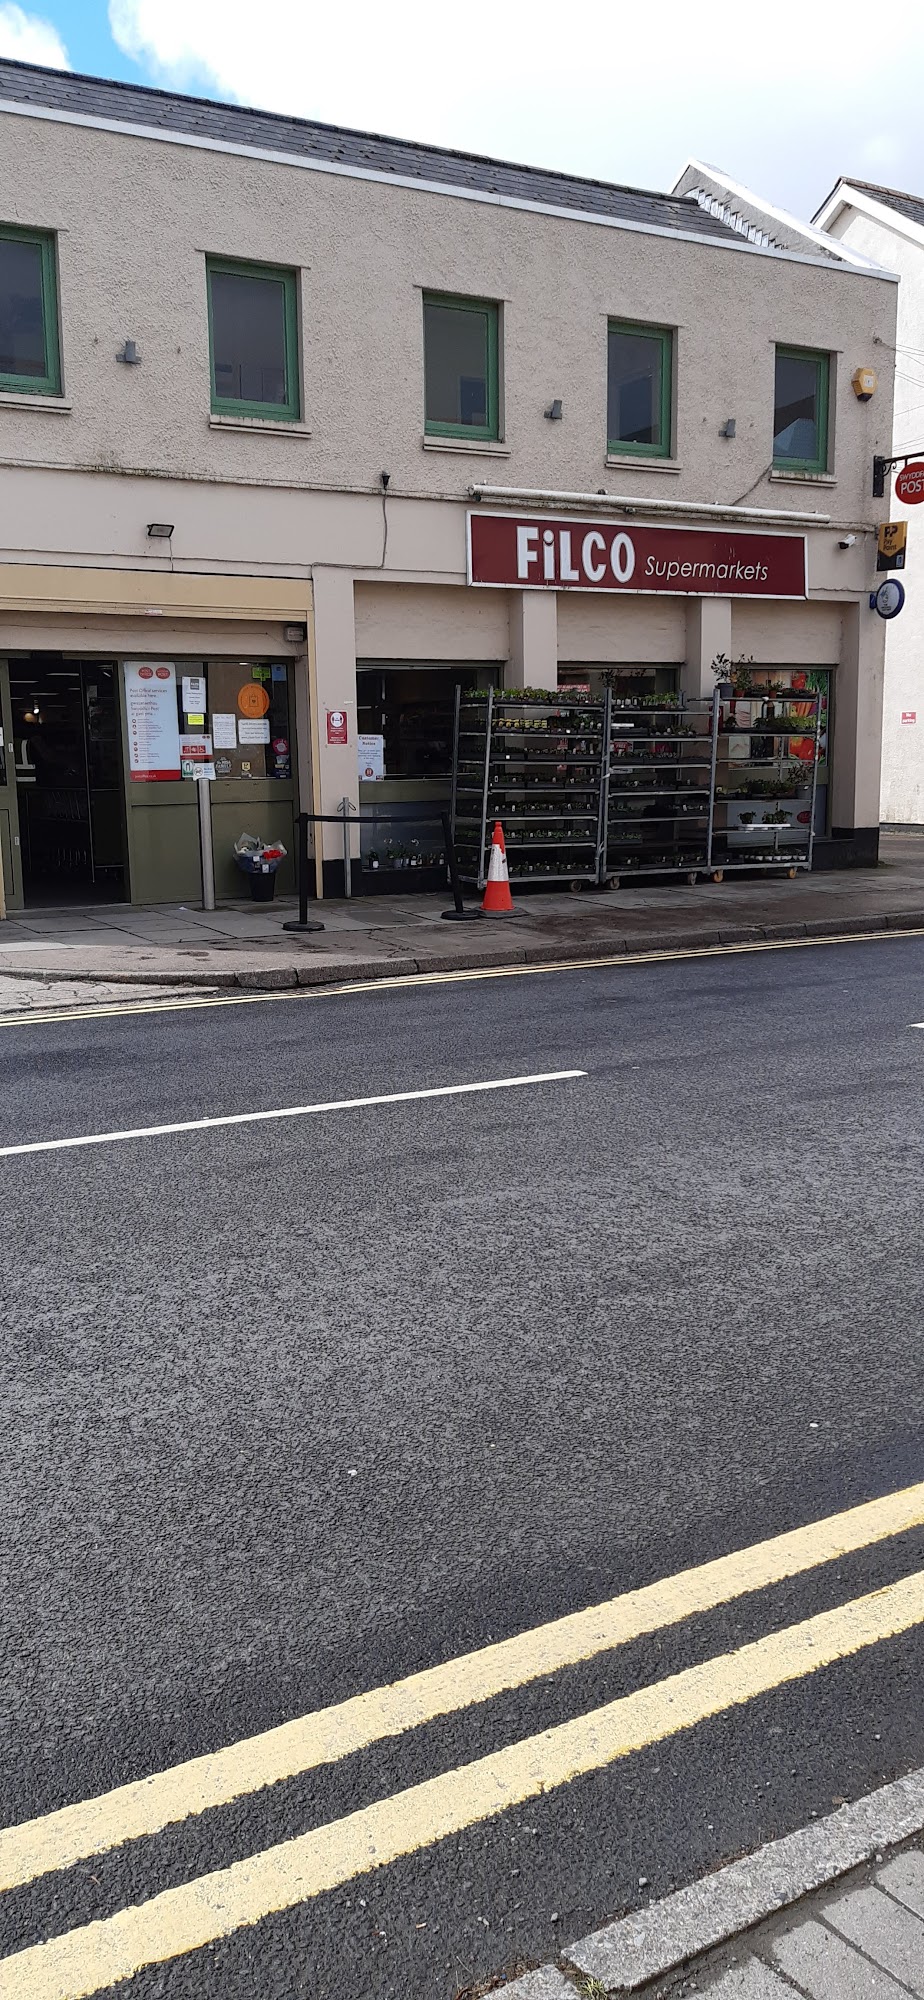 Filco Supermarket